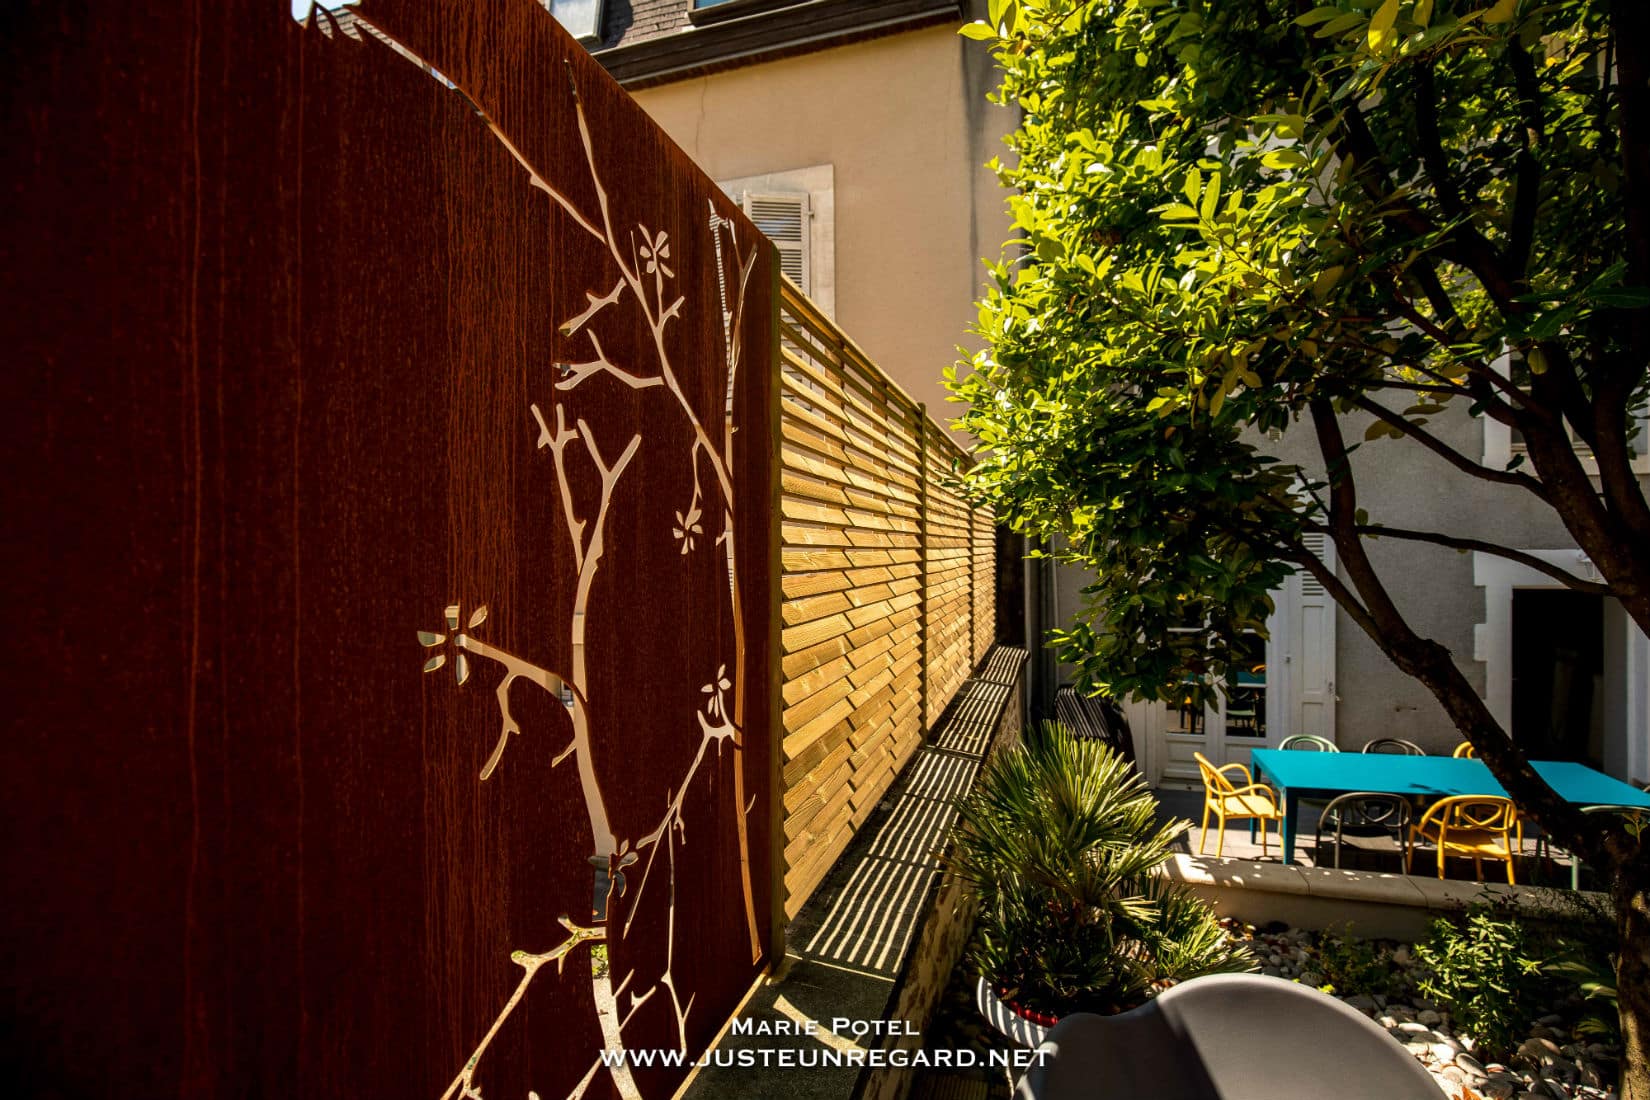 Brise-vue en bois  Contemporary garden design, Wood fence design